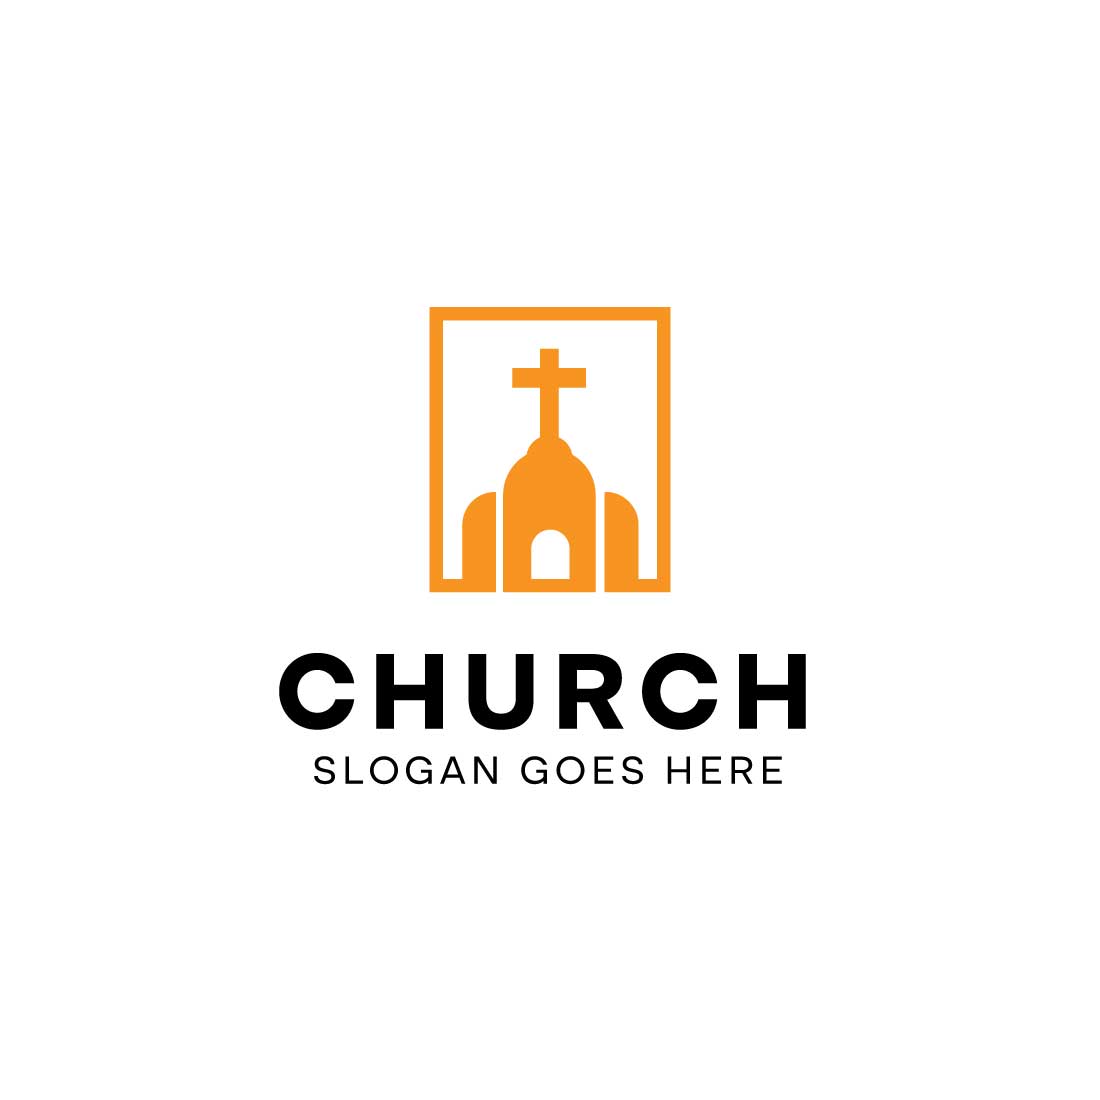 Church Chapel Worship Temple Logo cover image.